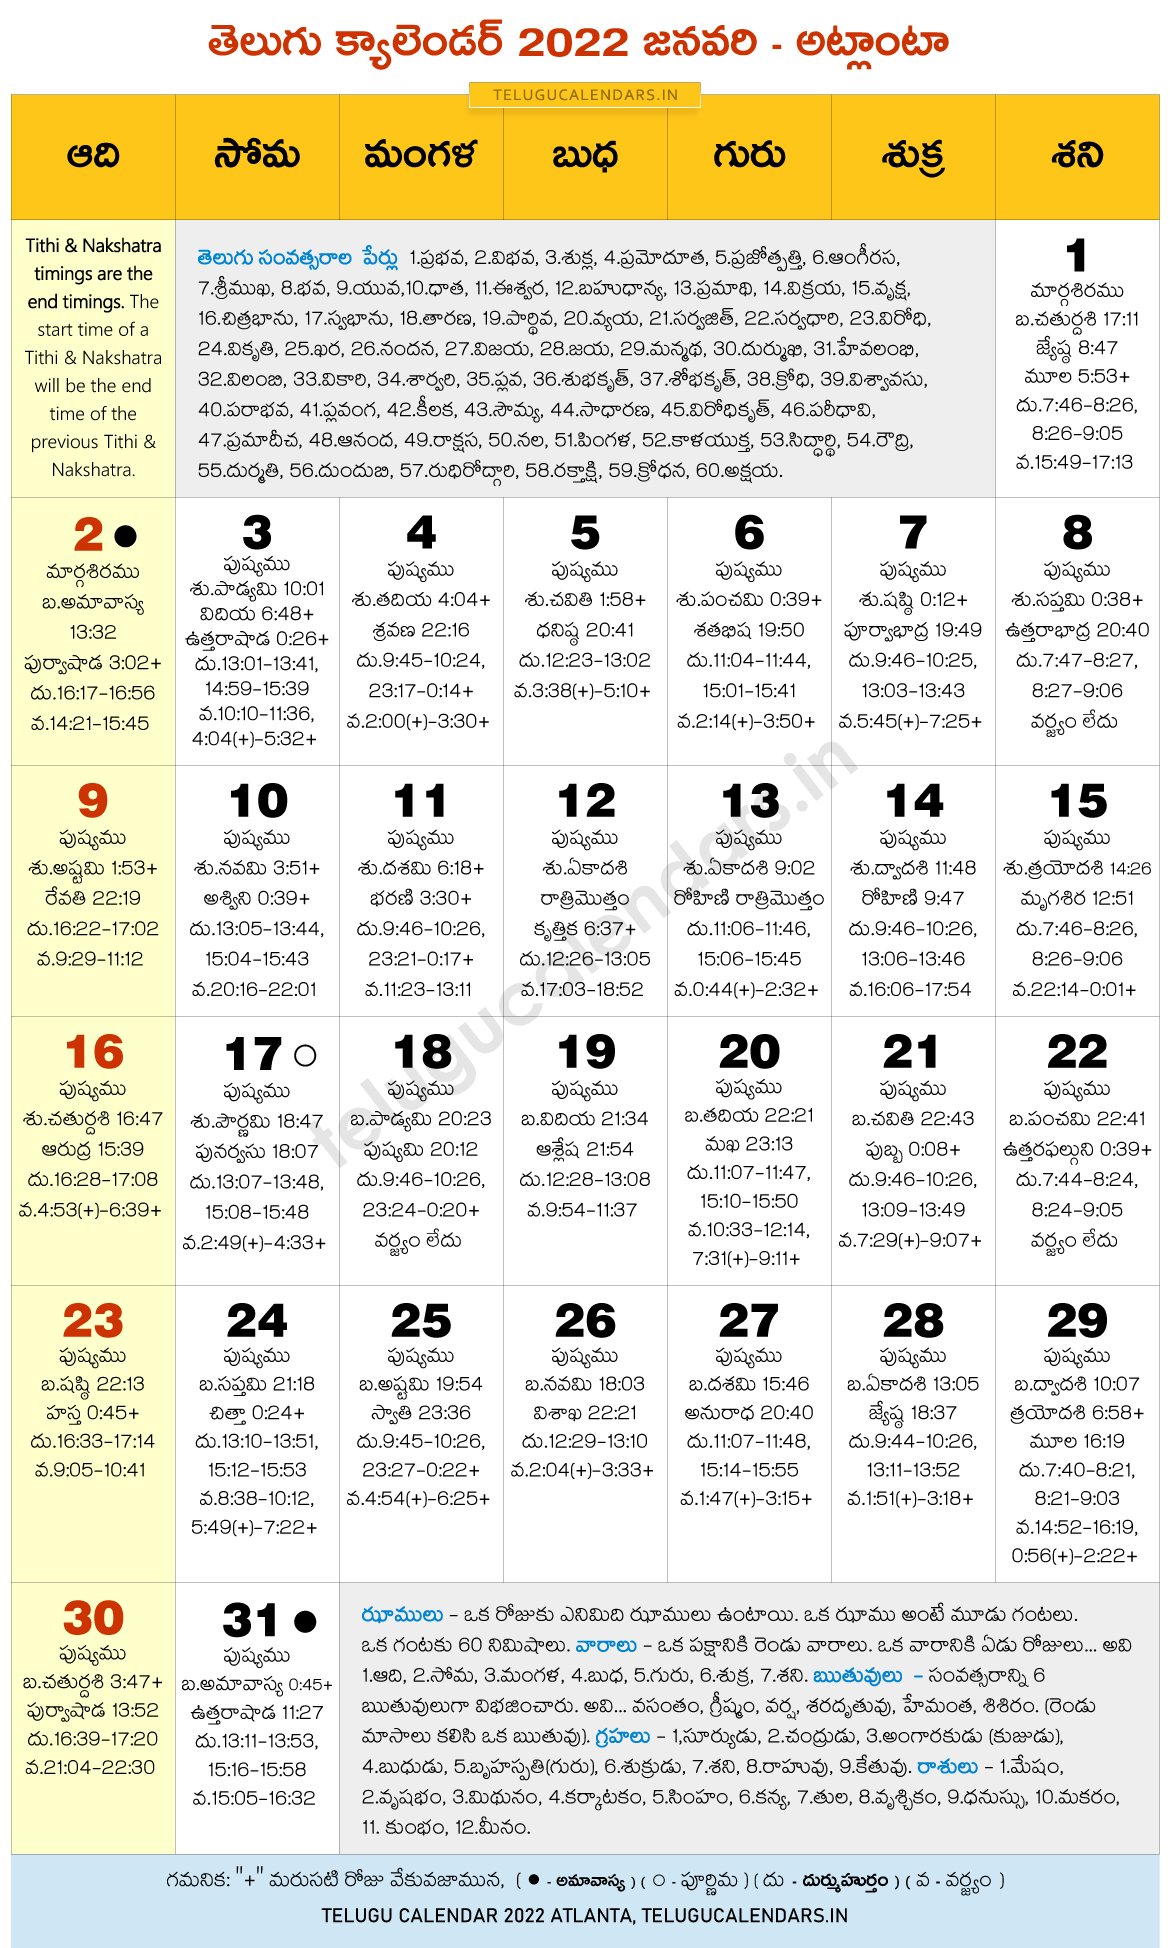 Atlanta Telugu Calendar 2022 - April 2022 Calendar  Free Telugu Calendar 2022